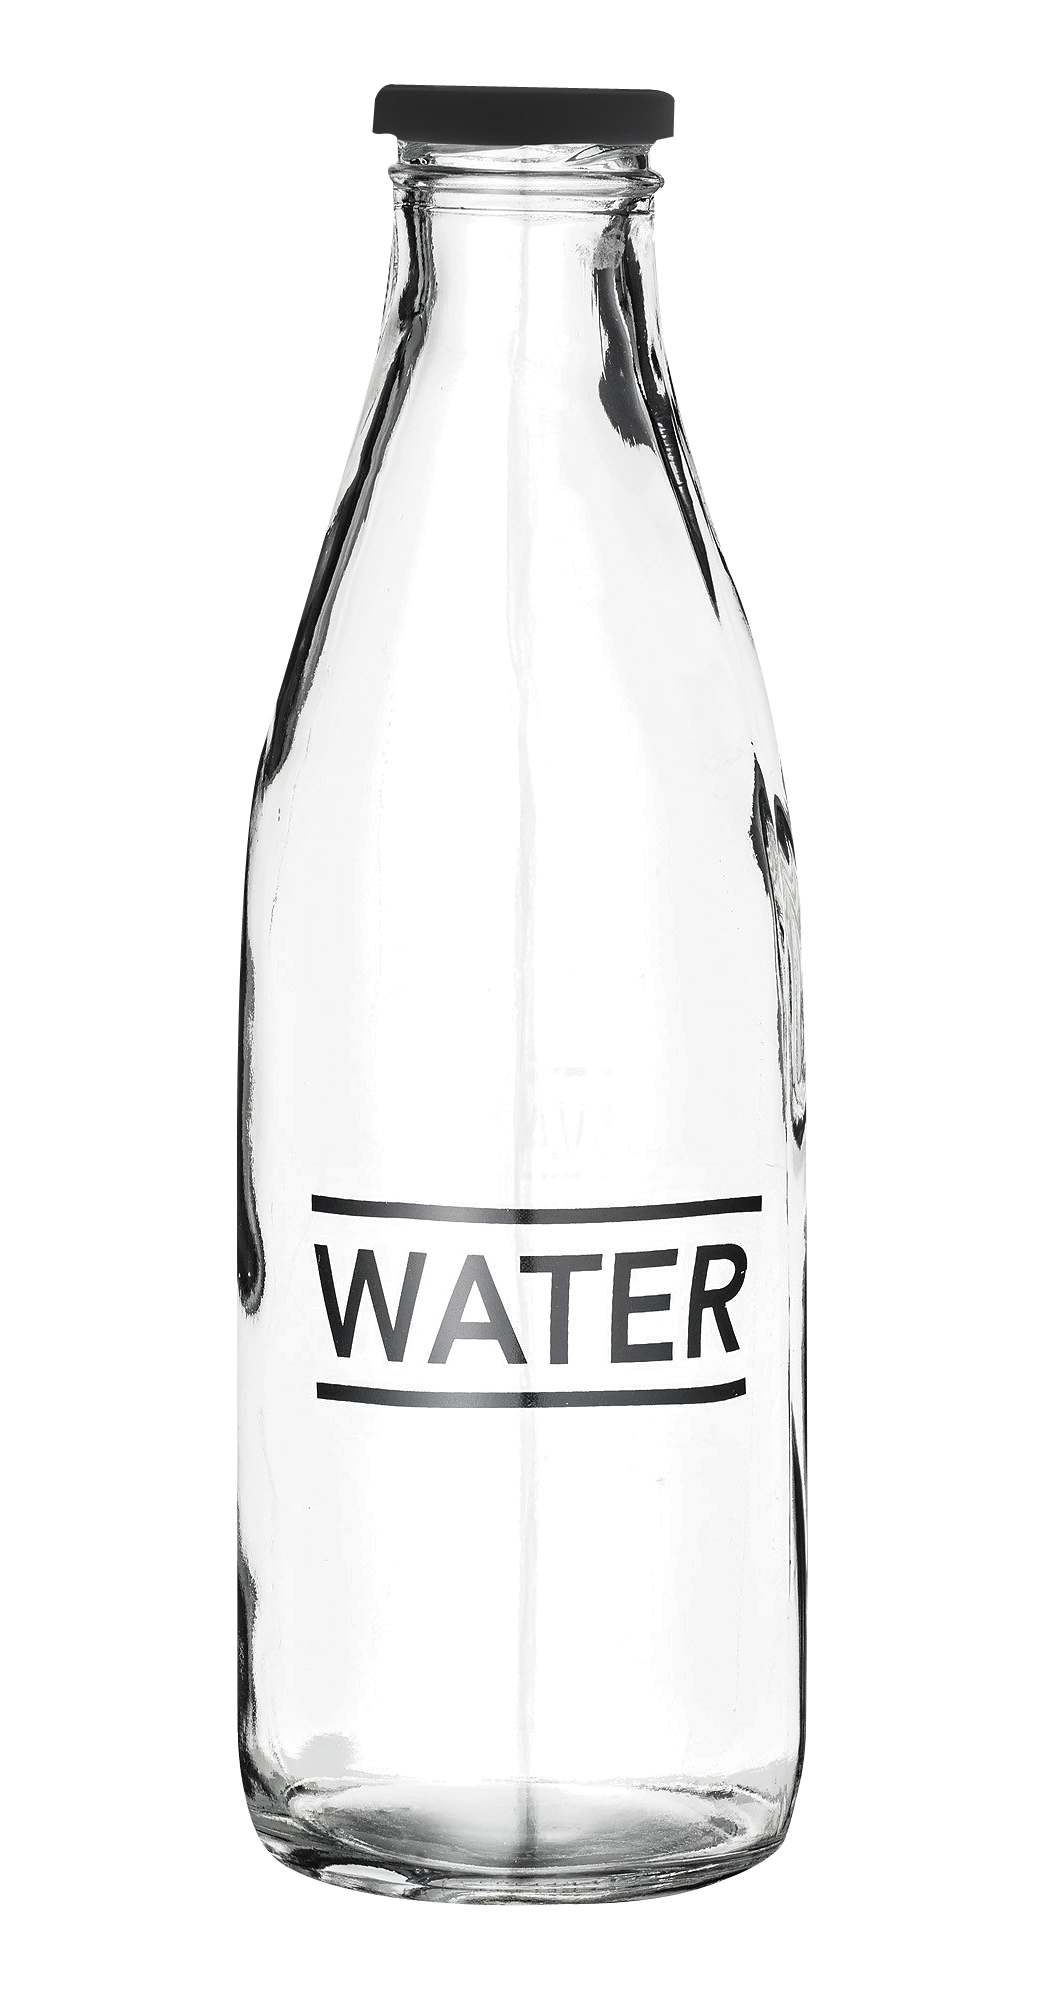 Glass Water Bottle Png Transparent Image - Bottle, Transparent background PNG HD thumbnail